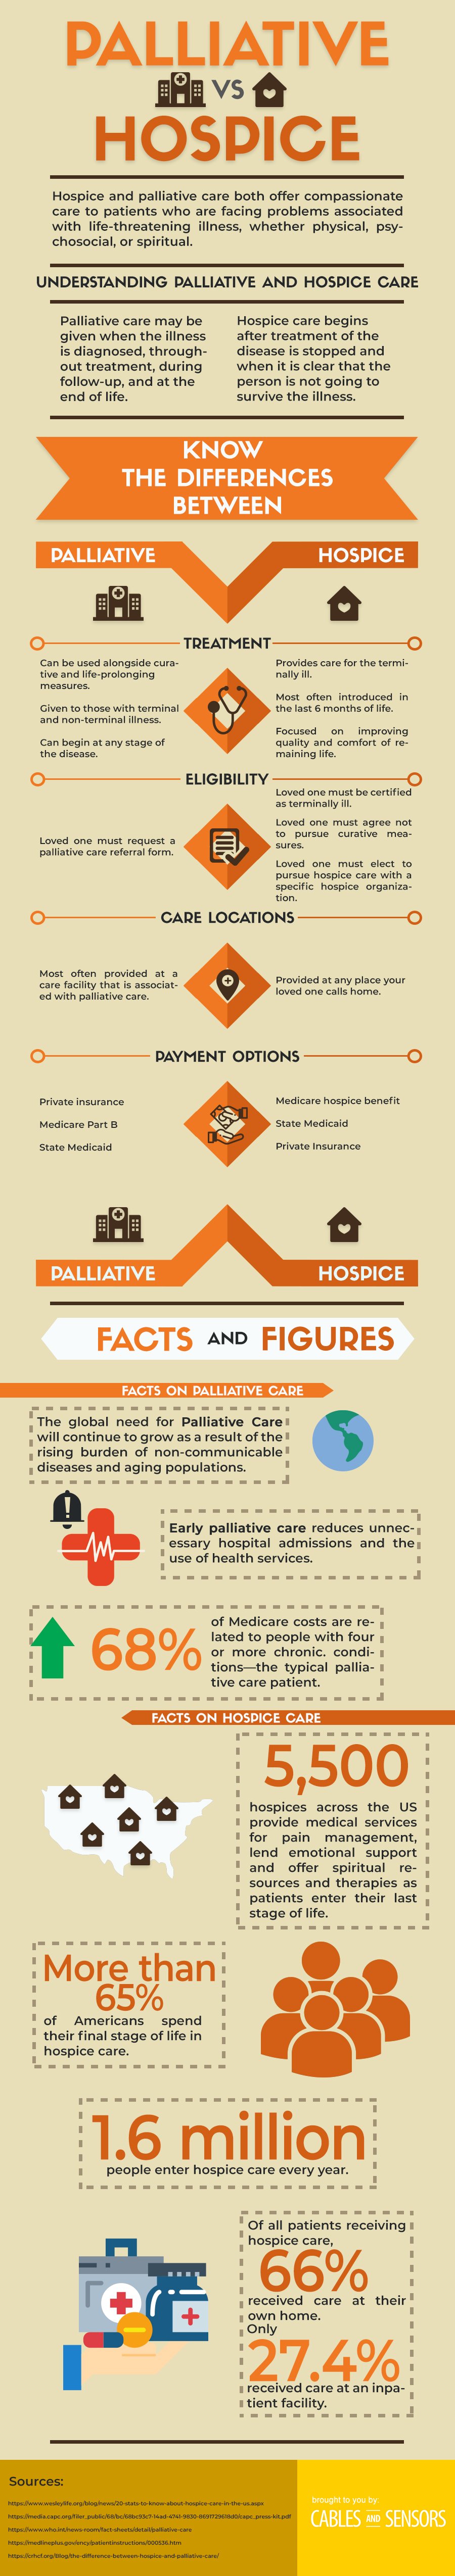 palliative and hospice care 